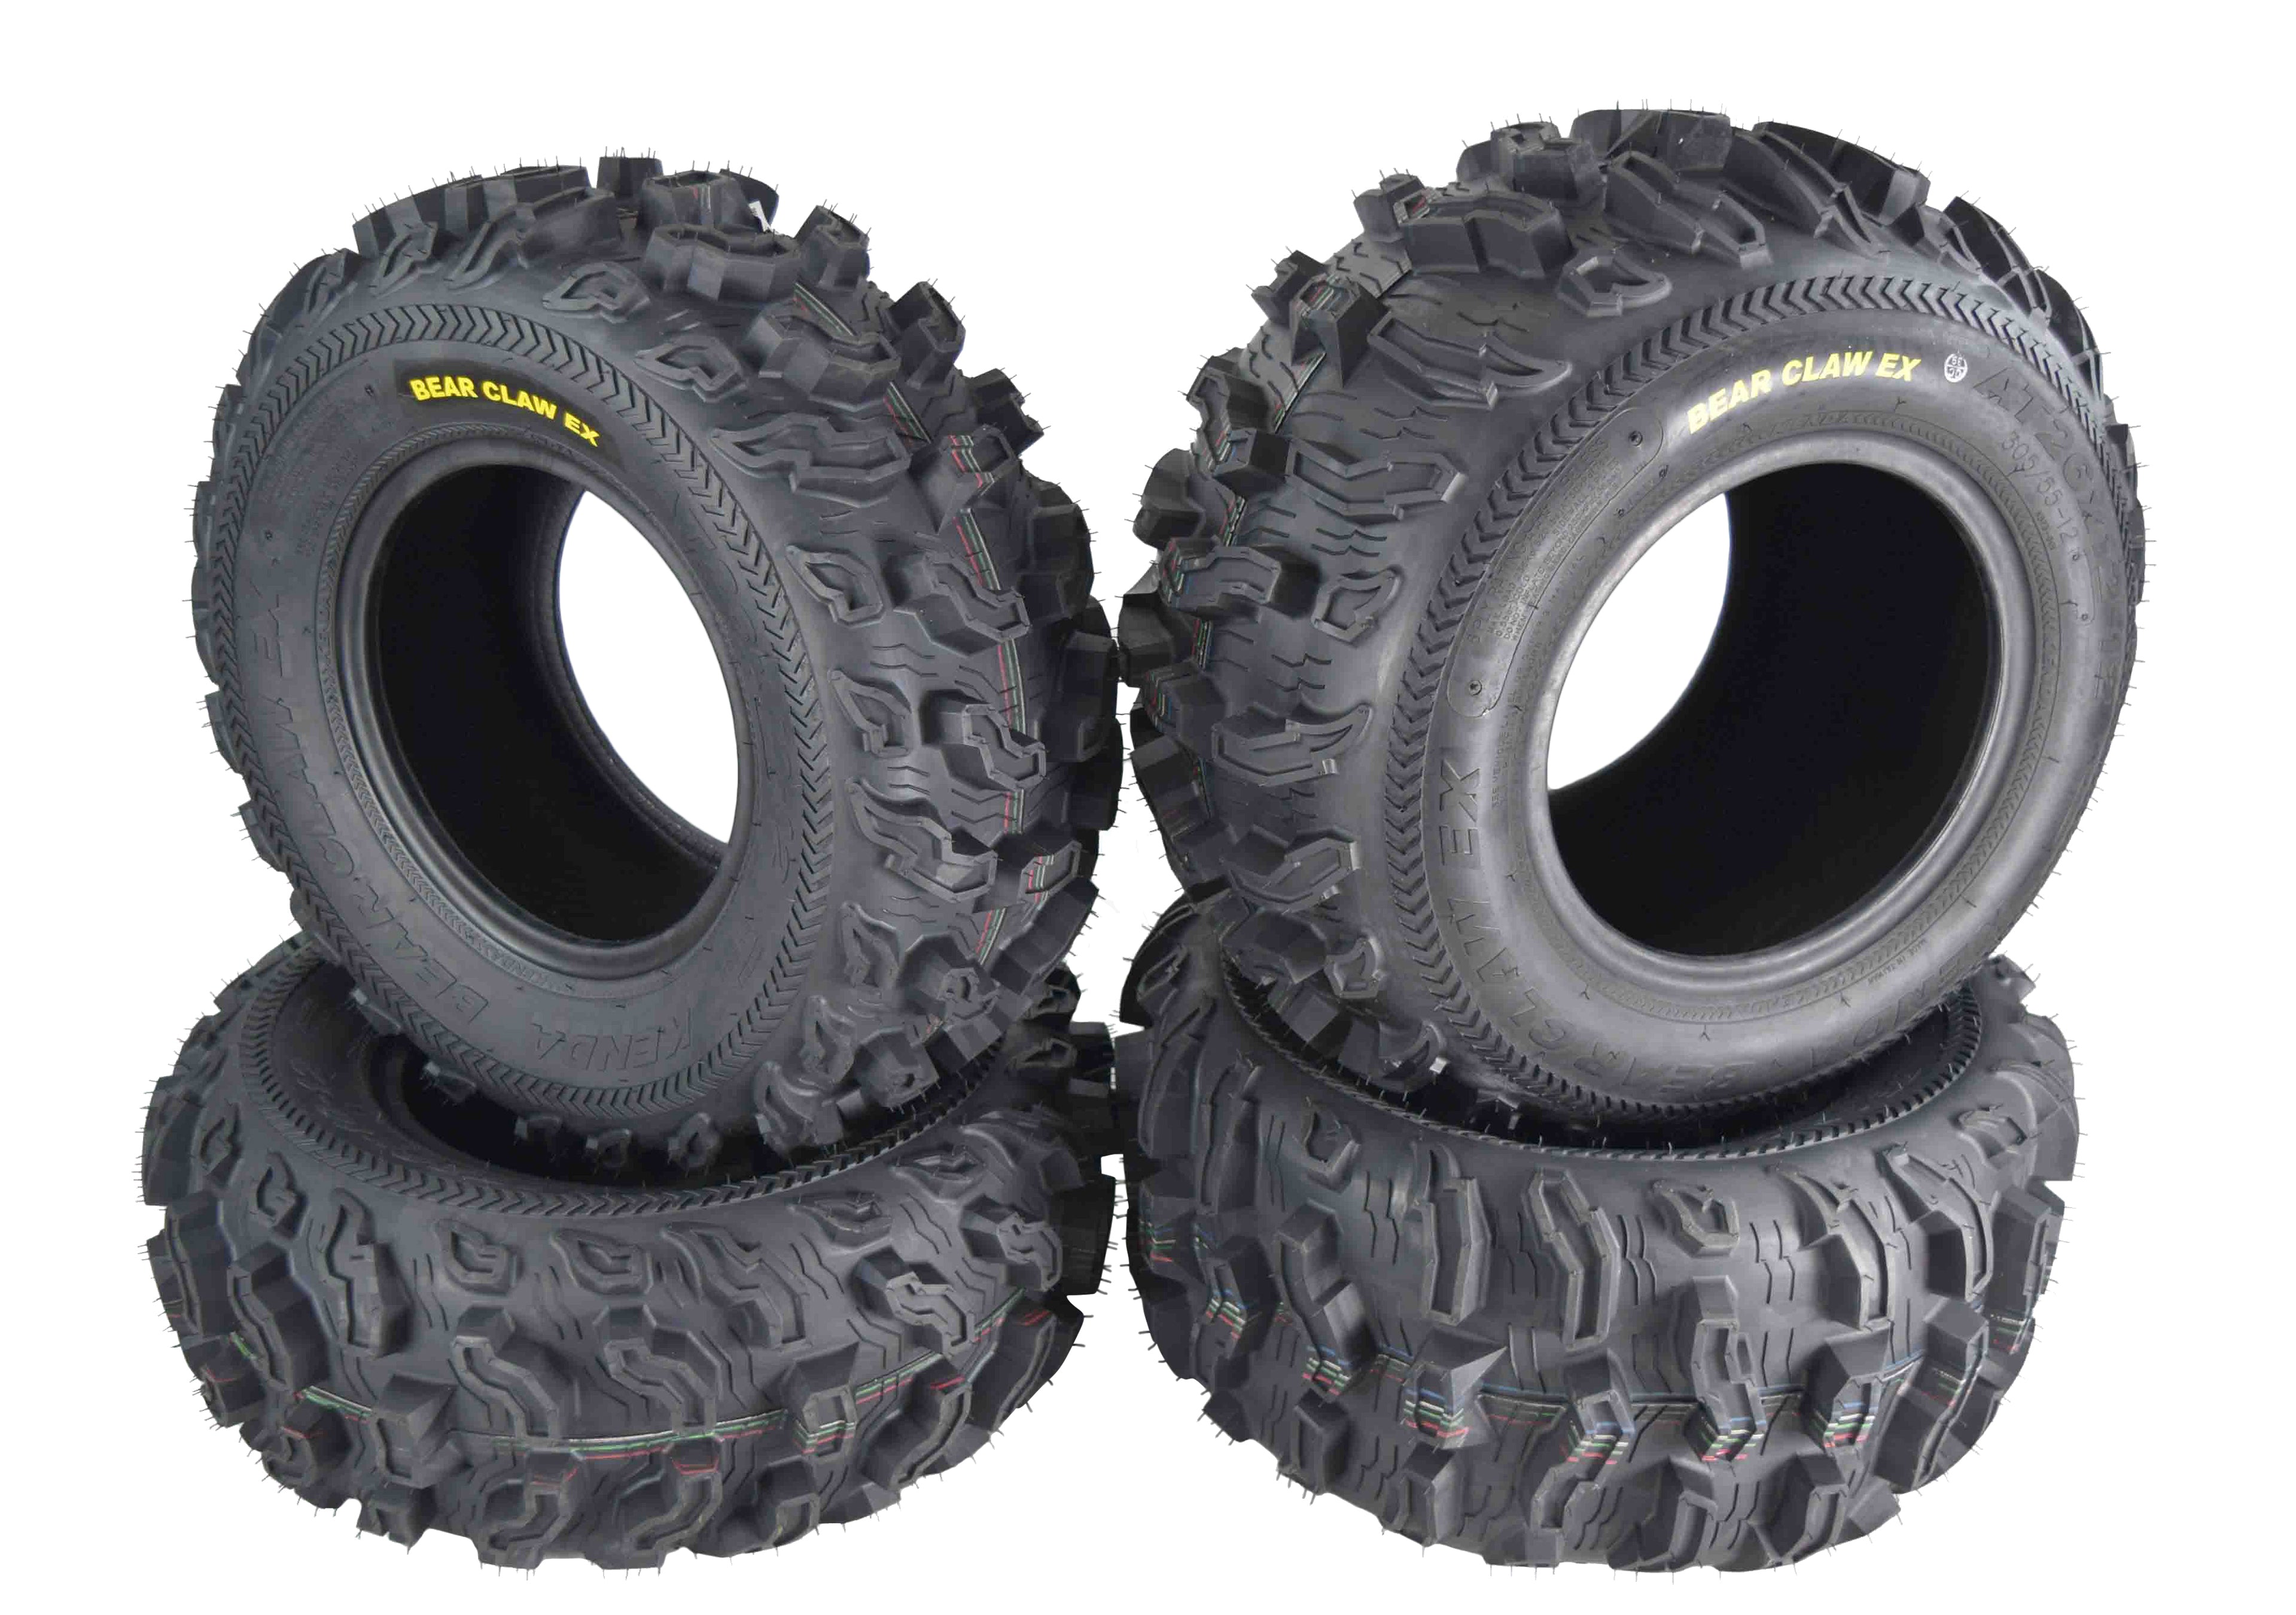 Kenda Bear Claw EX 26x10-12 F 26x12-12 R ATV 6 PLY Tires Bearclaw (4 Pack)